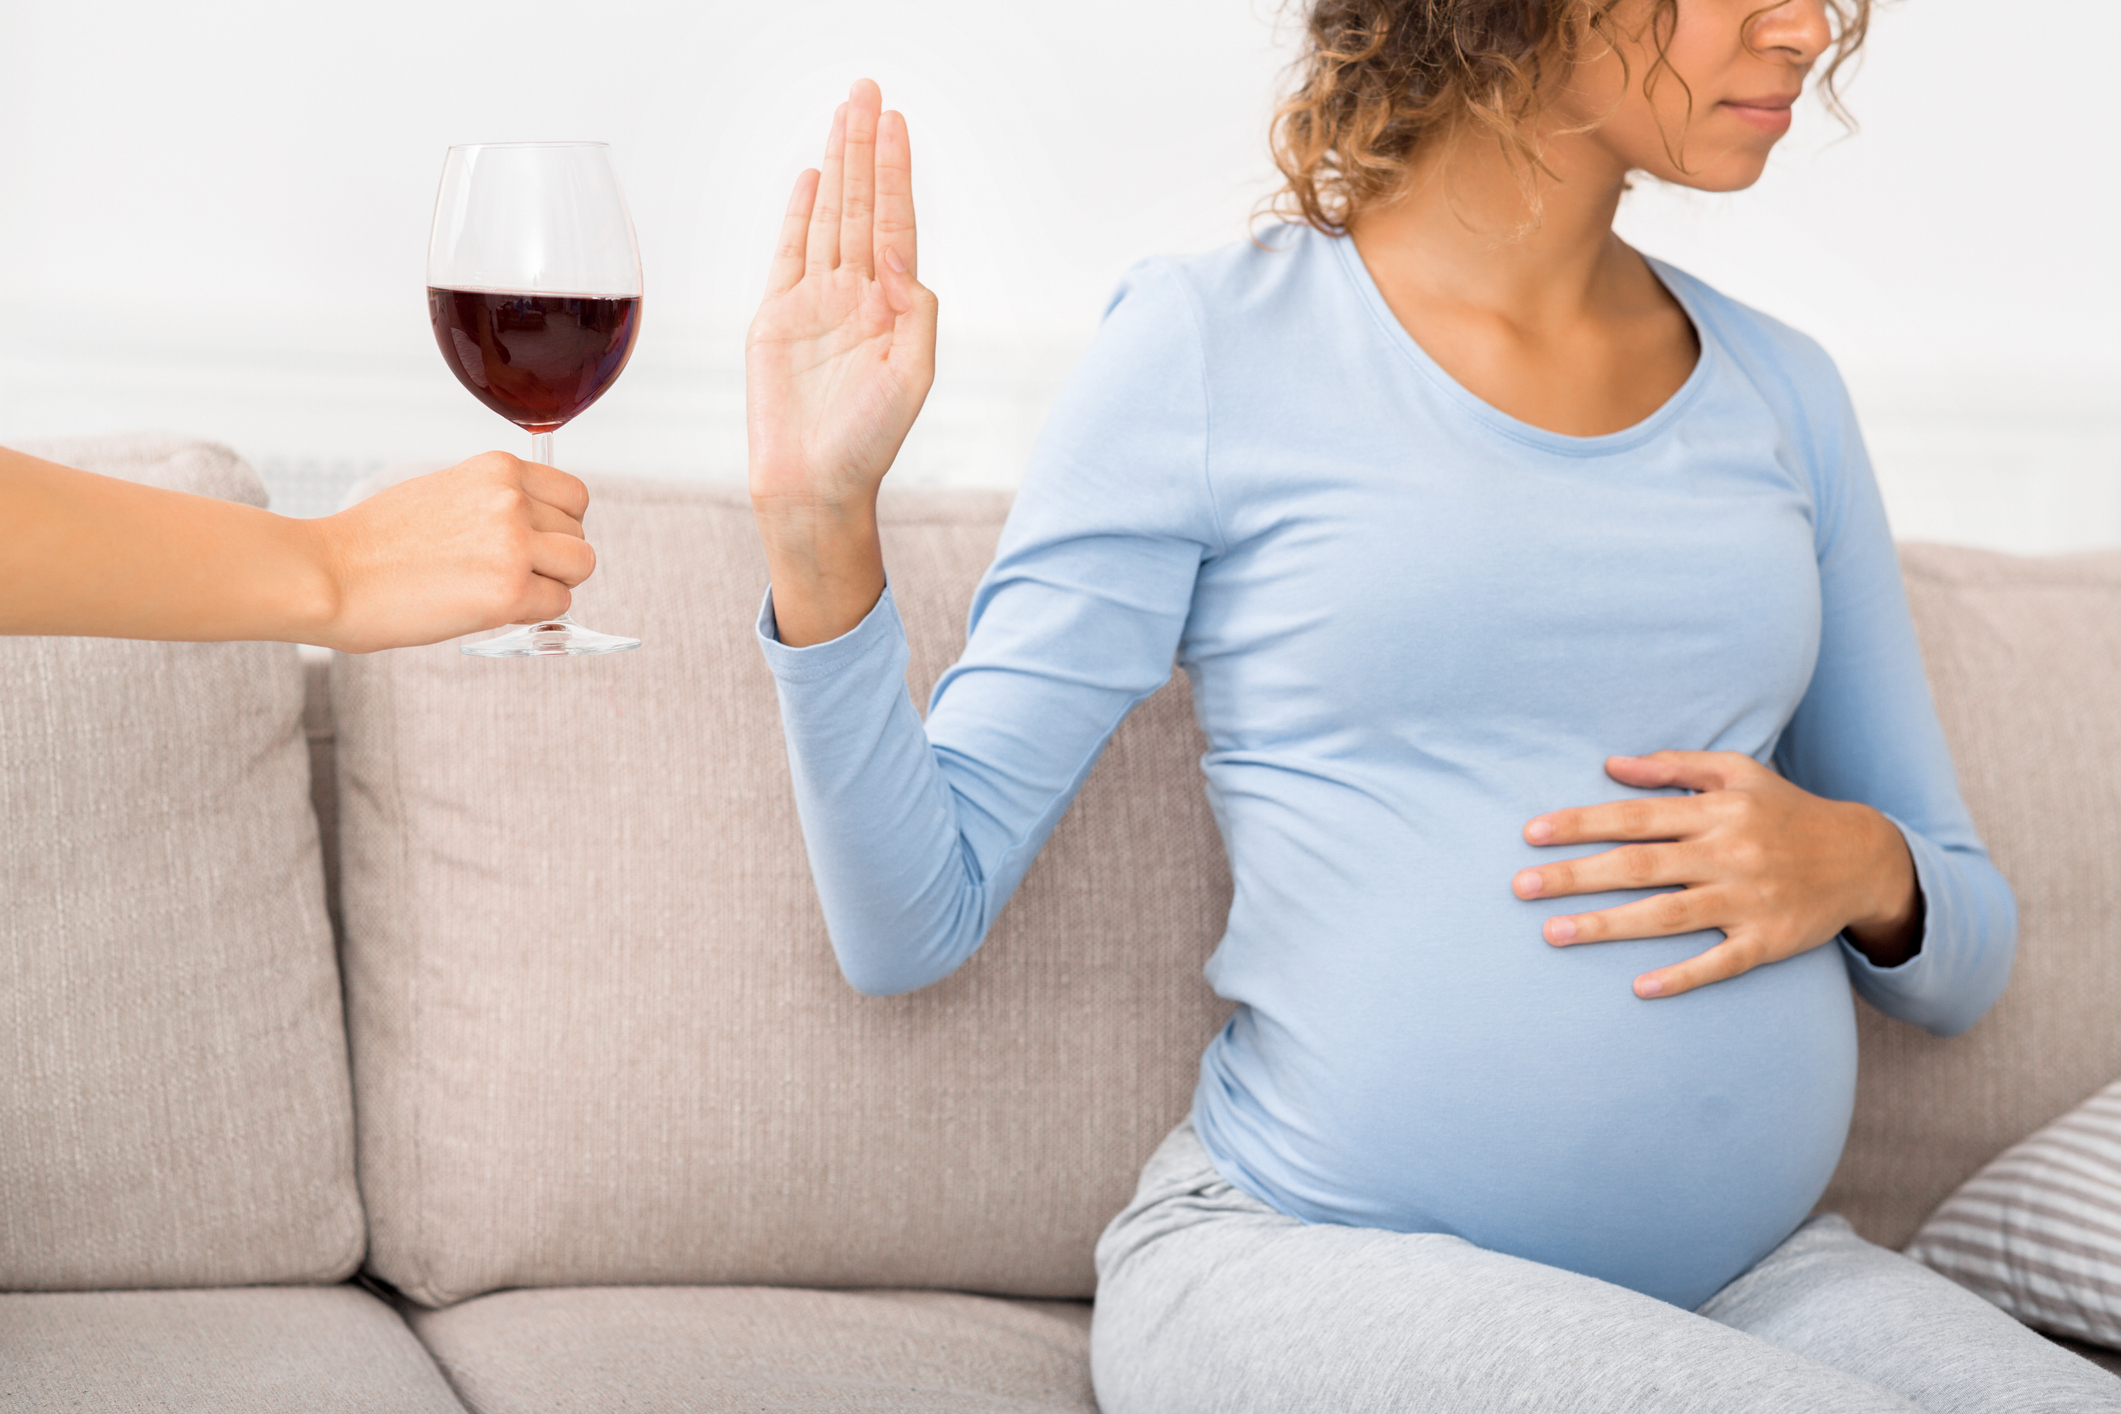 Pregnant woman refusing alcohol